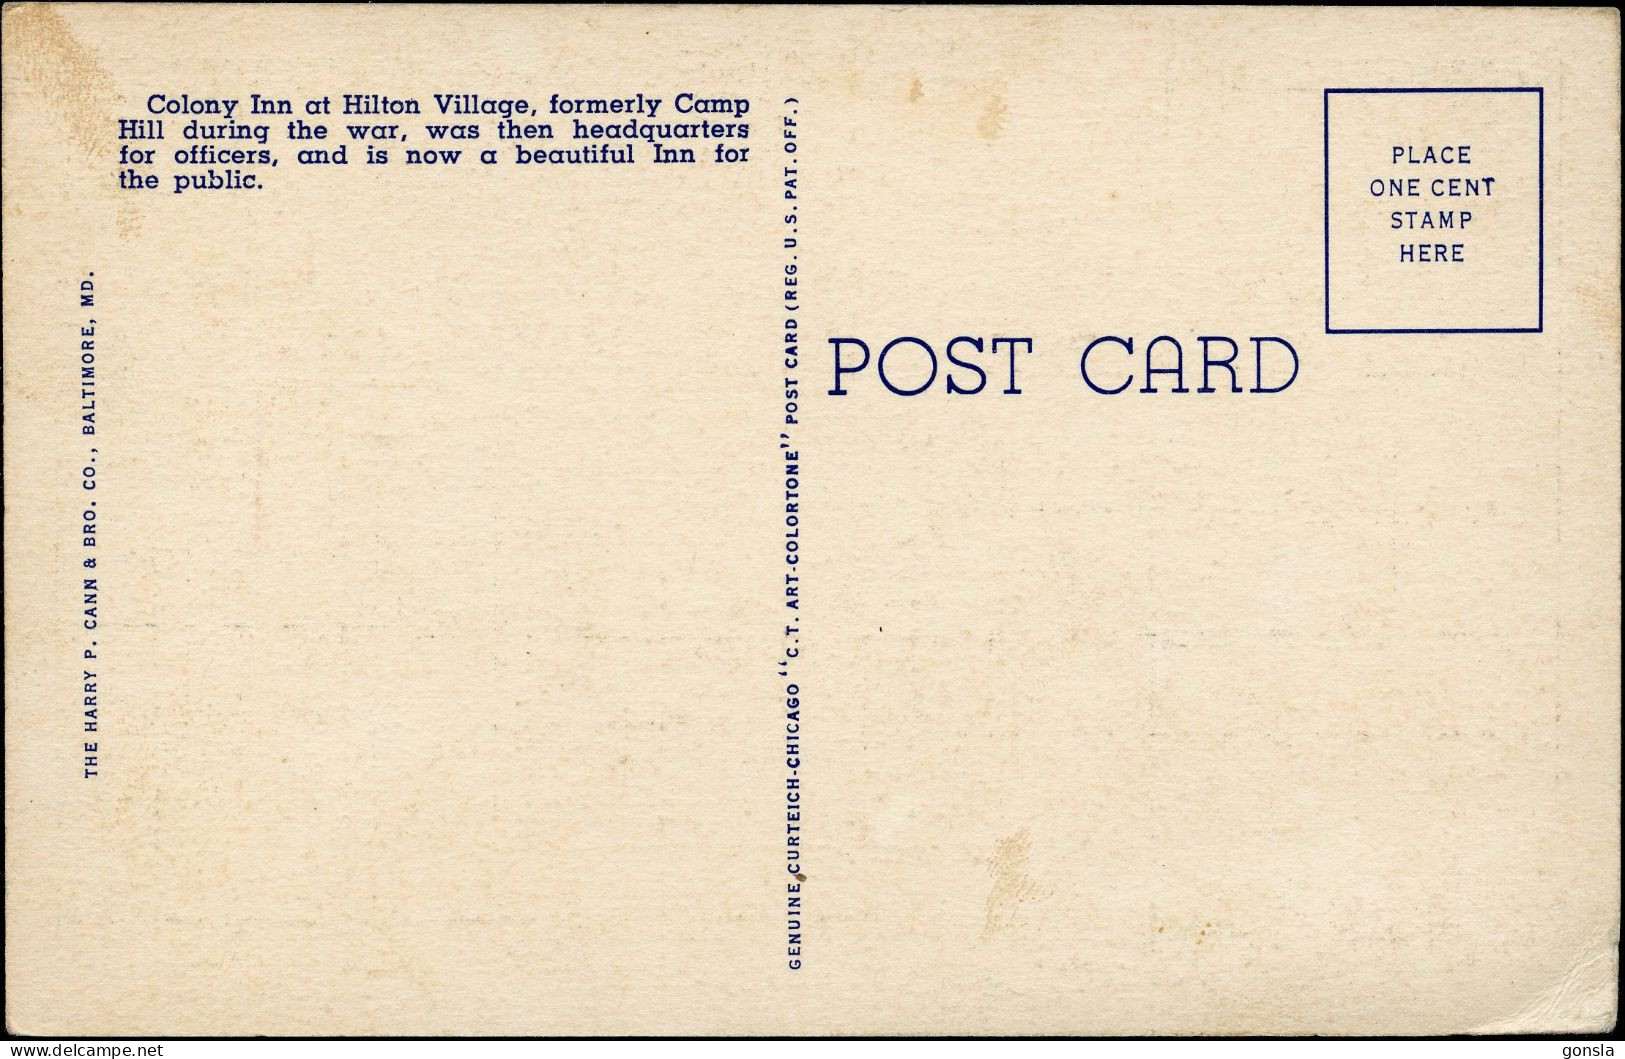 NEWPORT NEWS 1940 "Colony Inn – Hilton Village" - Newport News